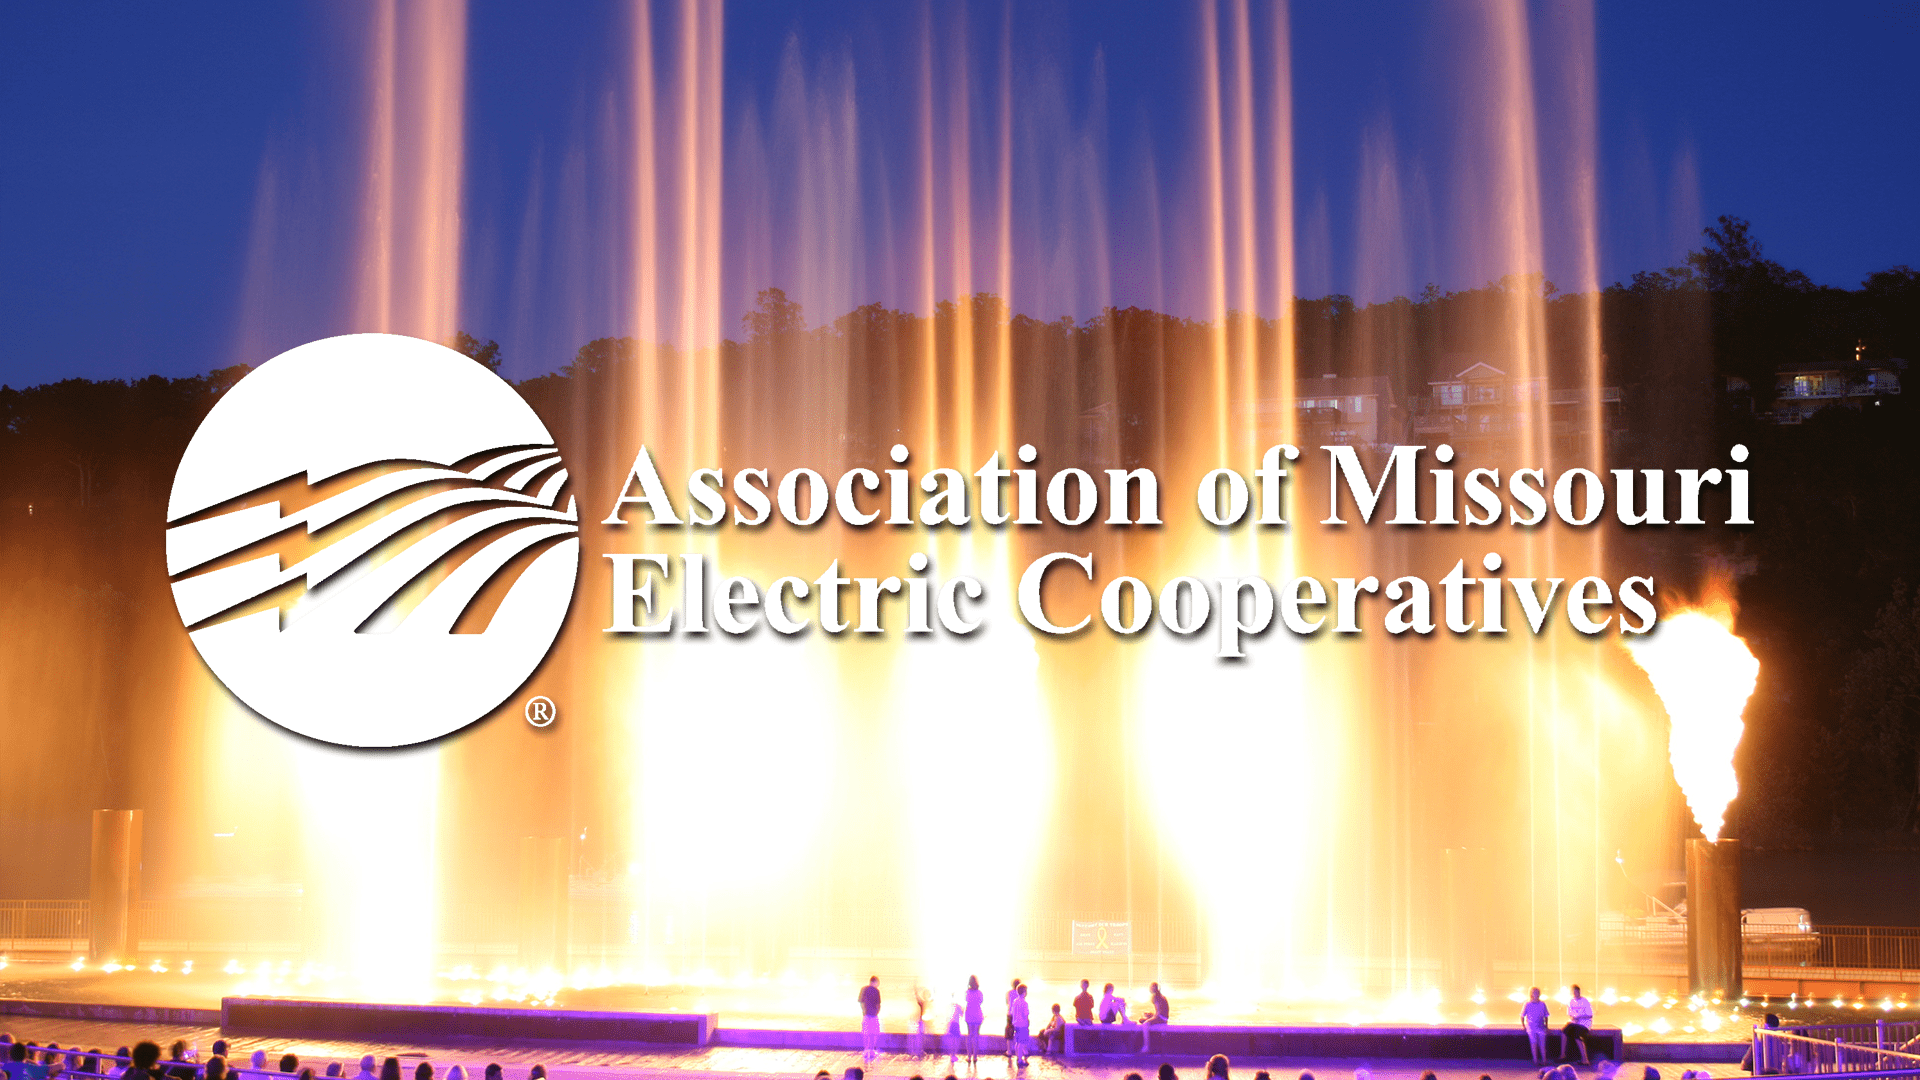 Association of Missouri Electric Cooperatives’ Annual Membership Meeting, Branson, MO